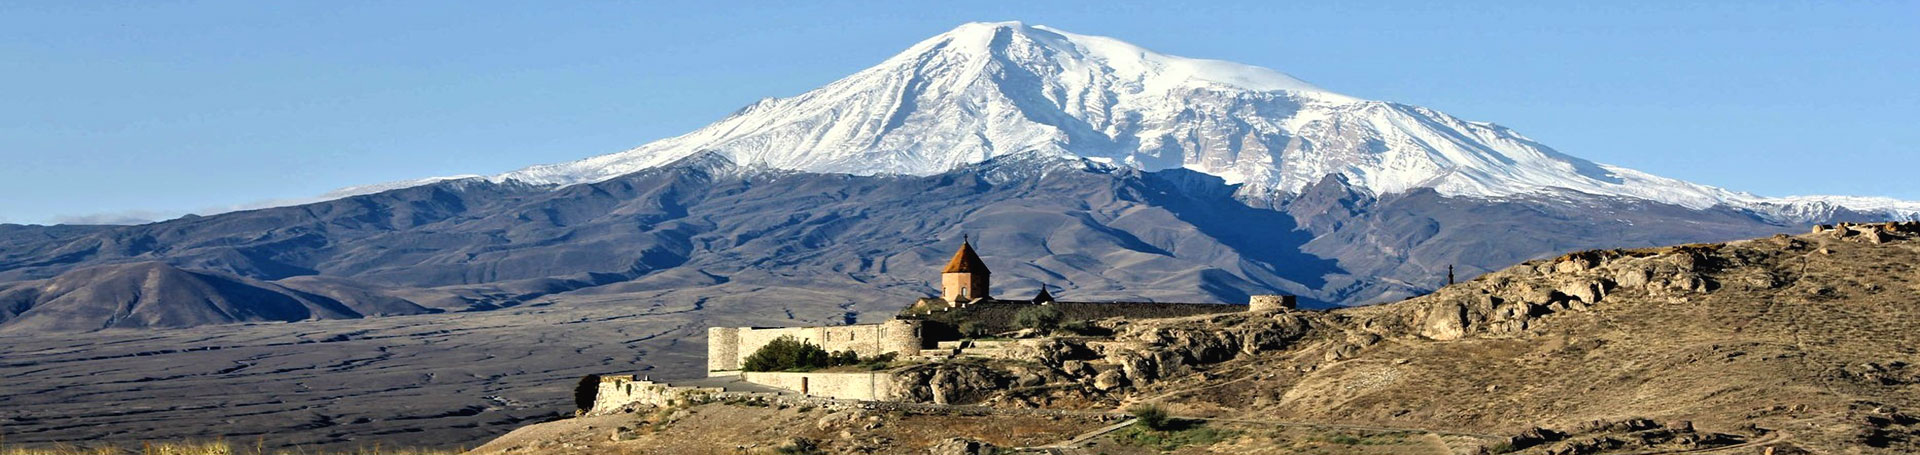 ارمنستان-بنر